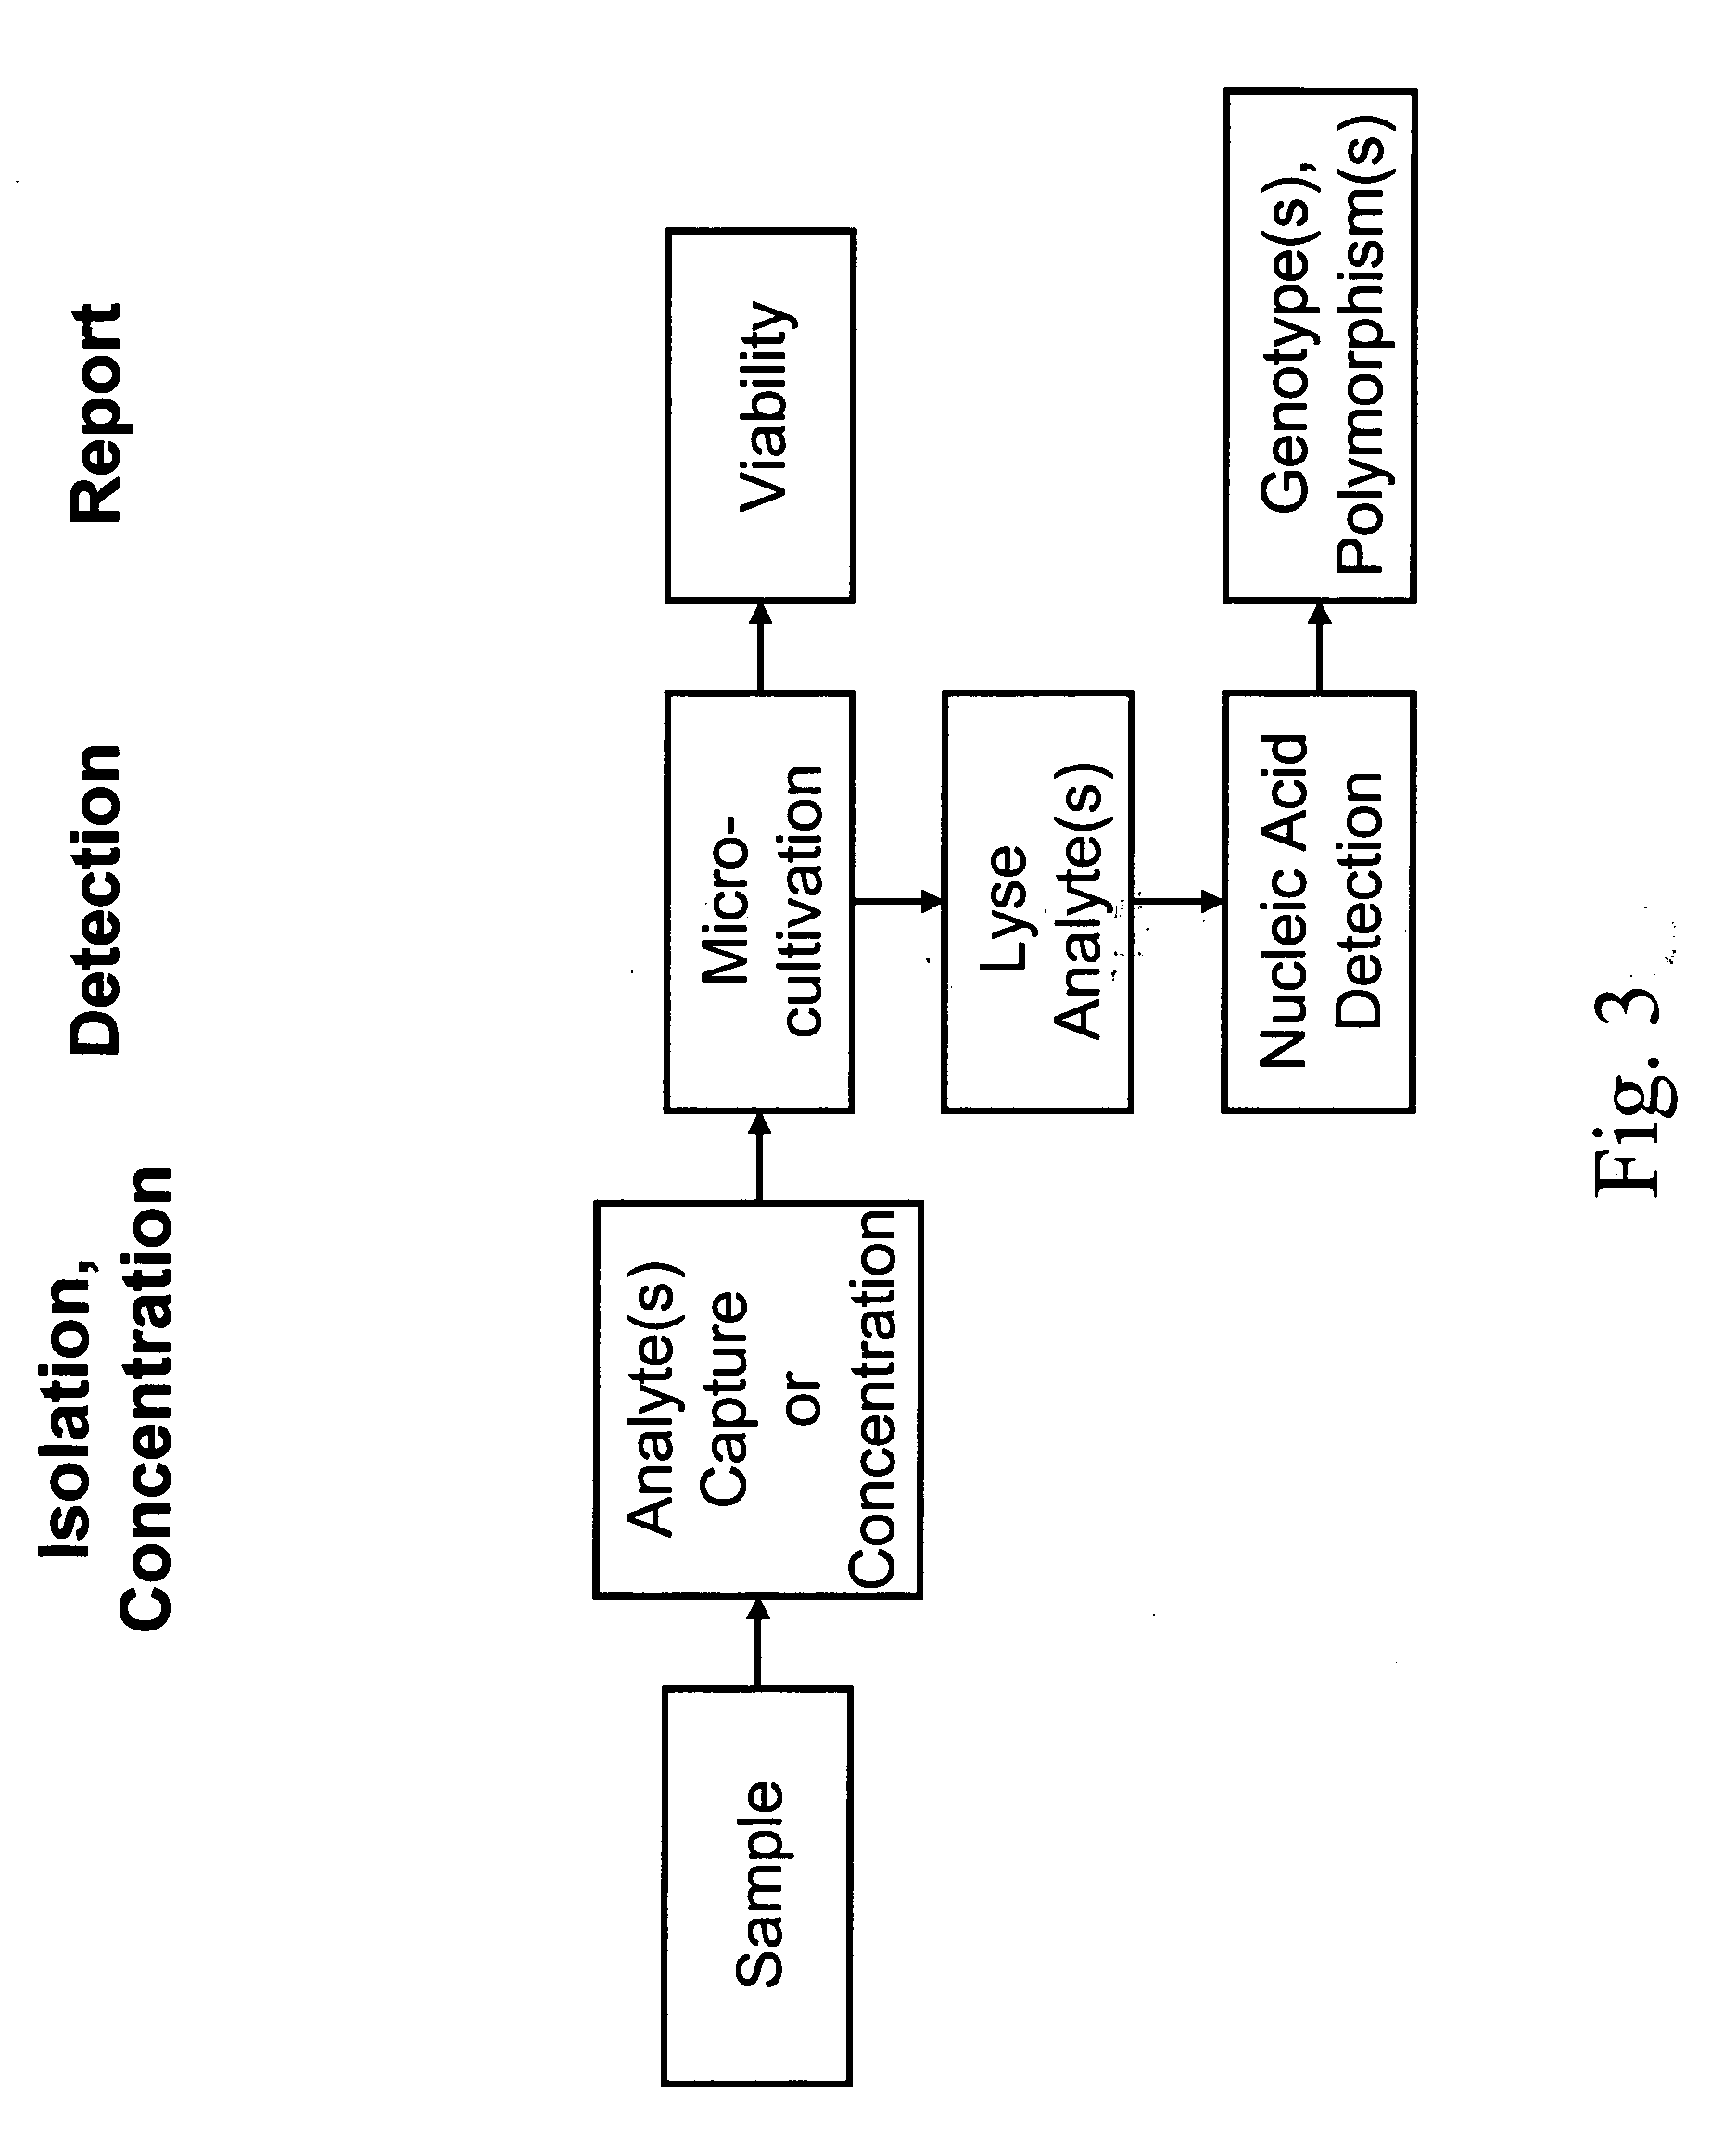 Integrated multistep bioprocessor and sensor